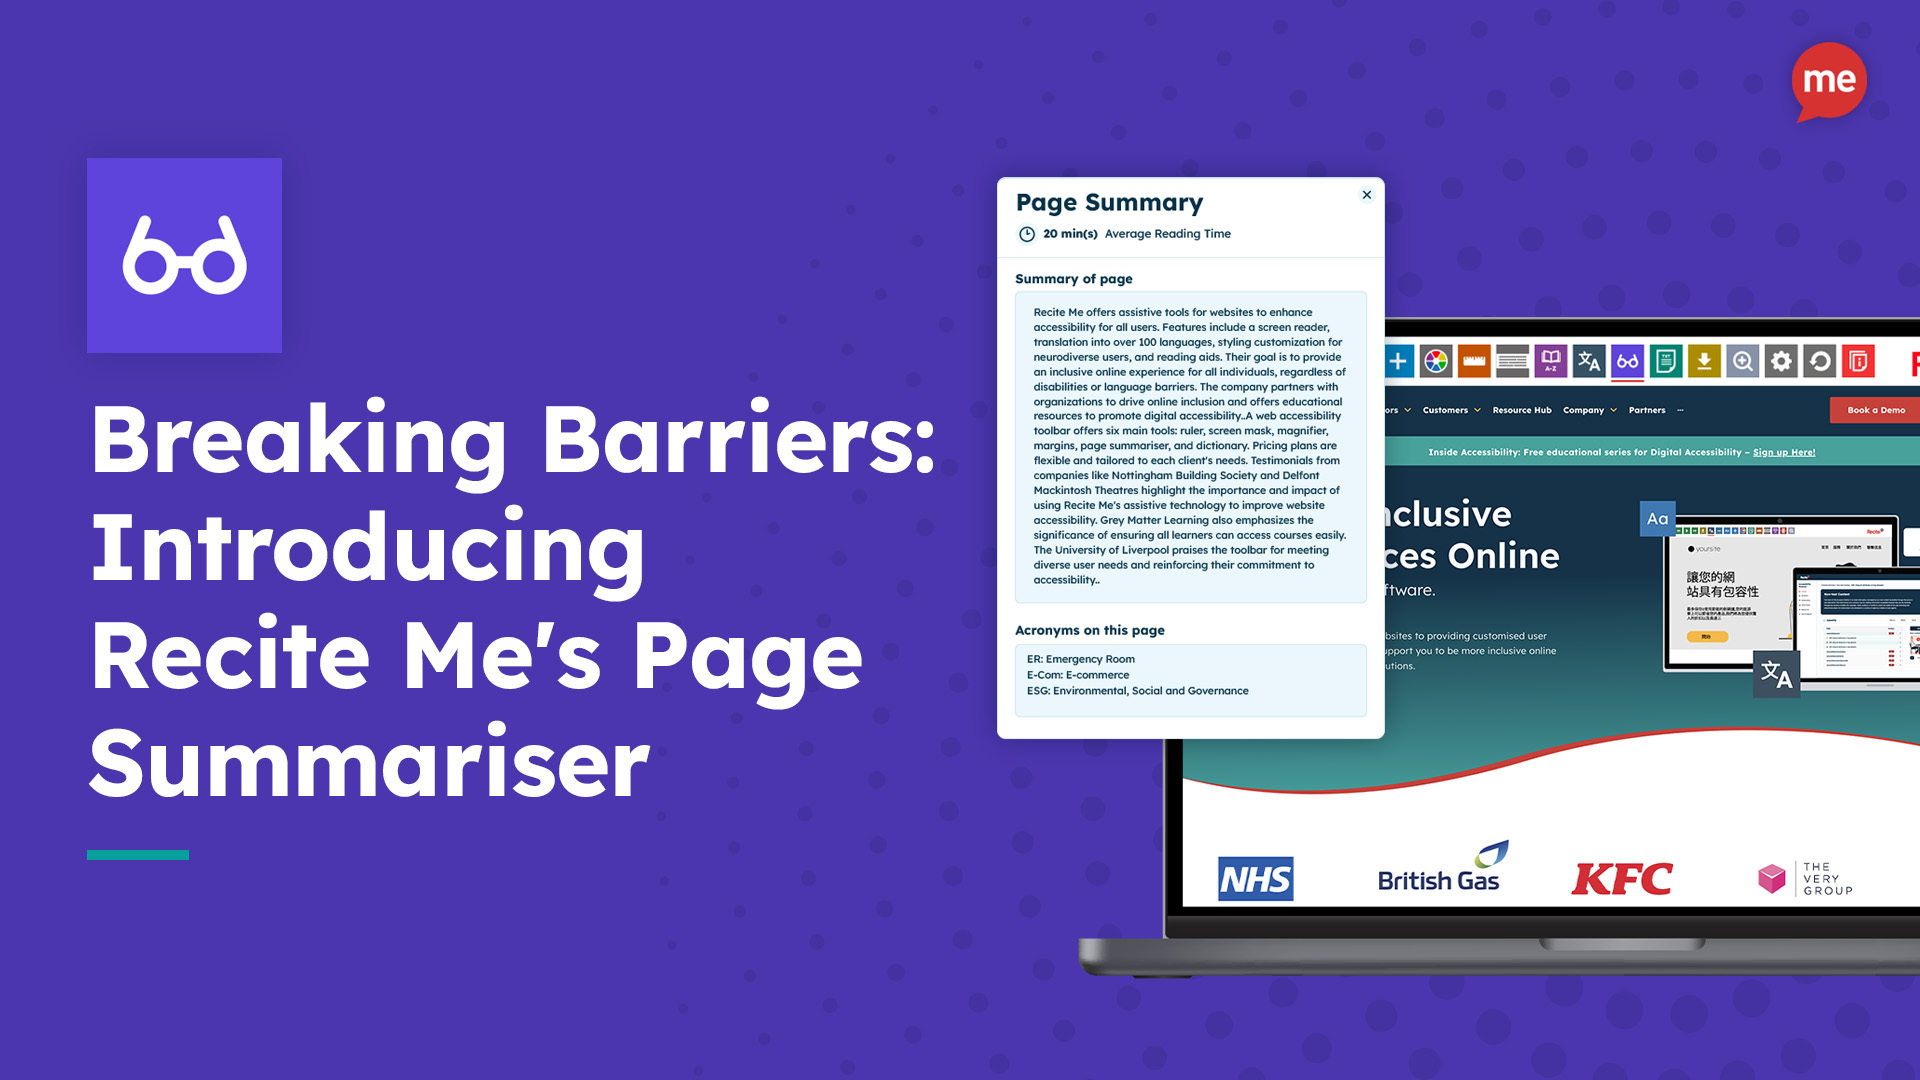 Breaking Barriers: Introducing Recite Me's Page Summariser